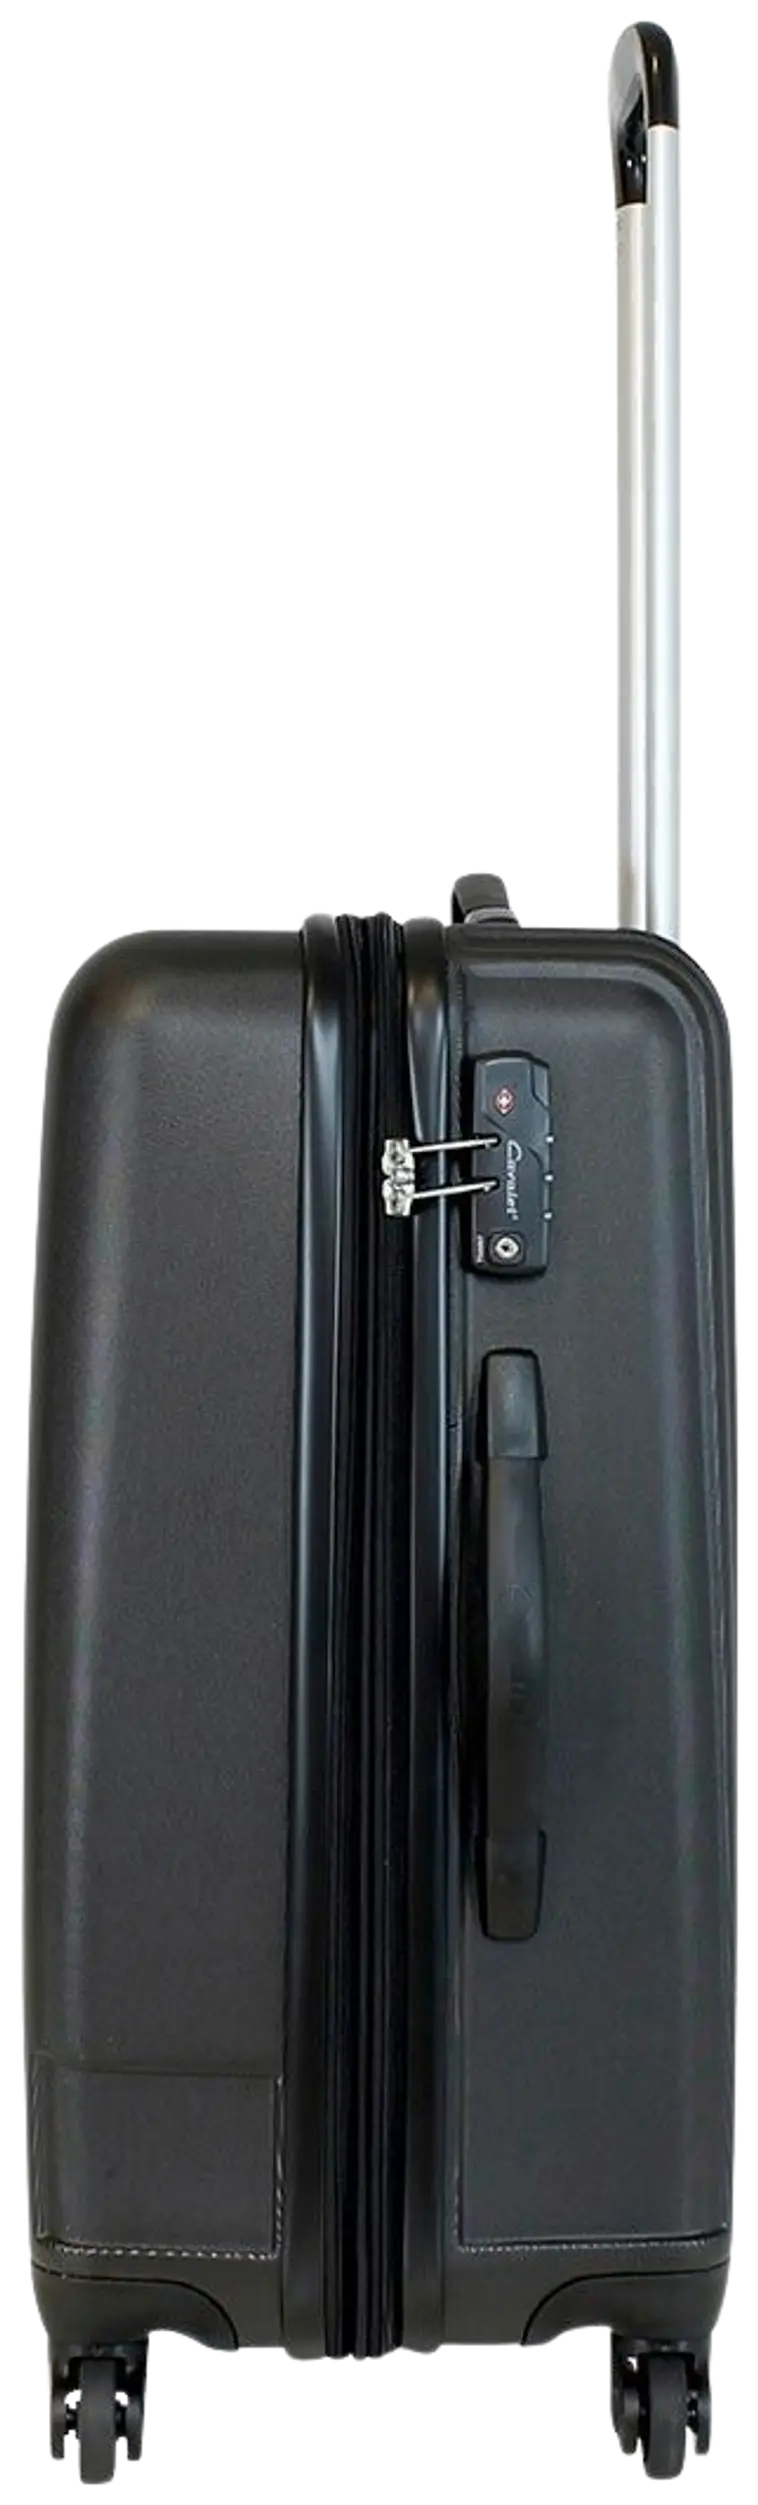 Cavalet Malibu matkalaukku M 65 cm, musta - 4